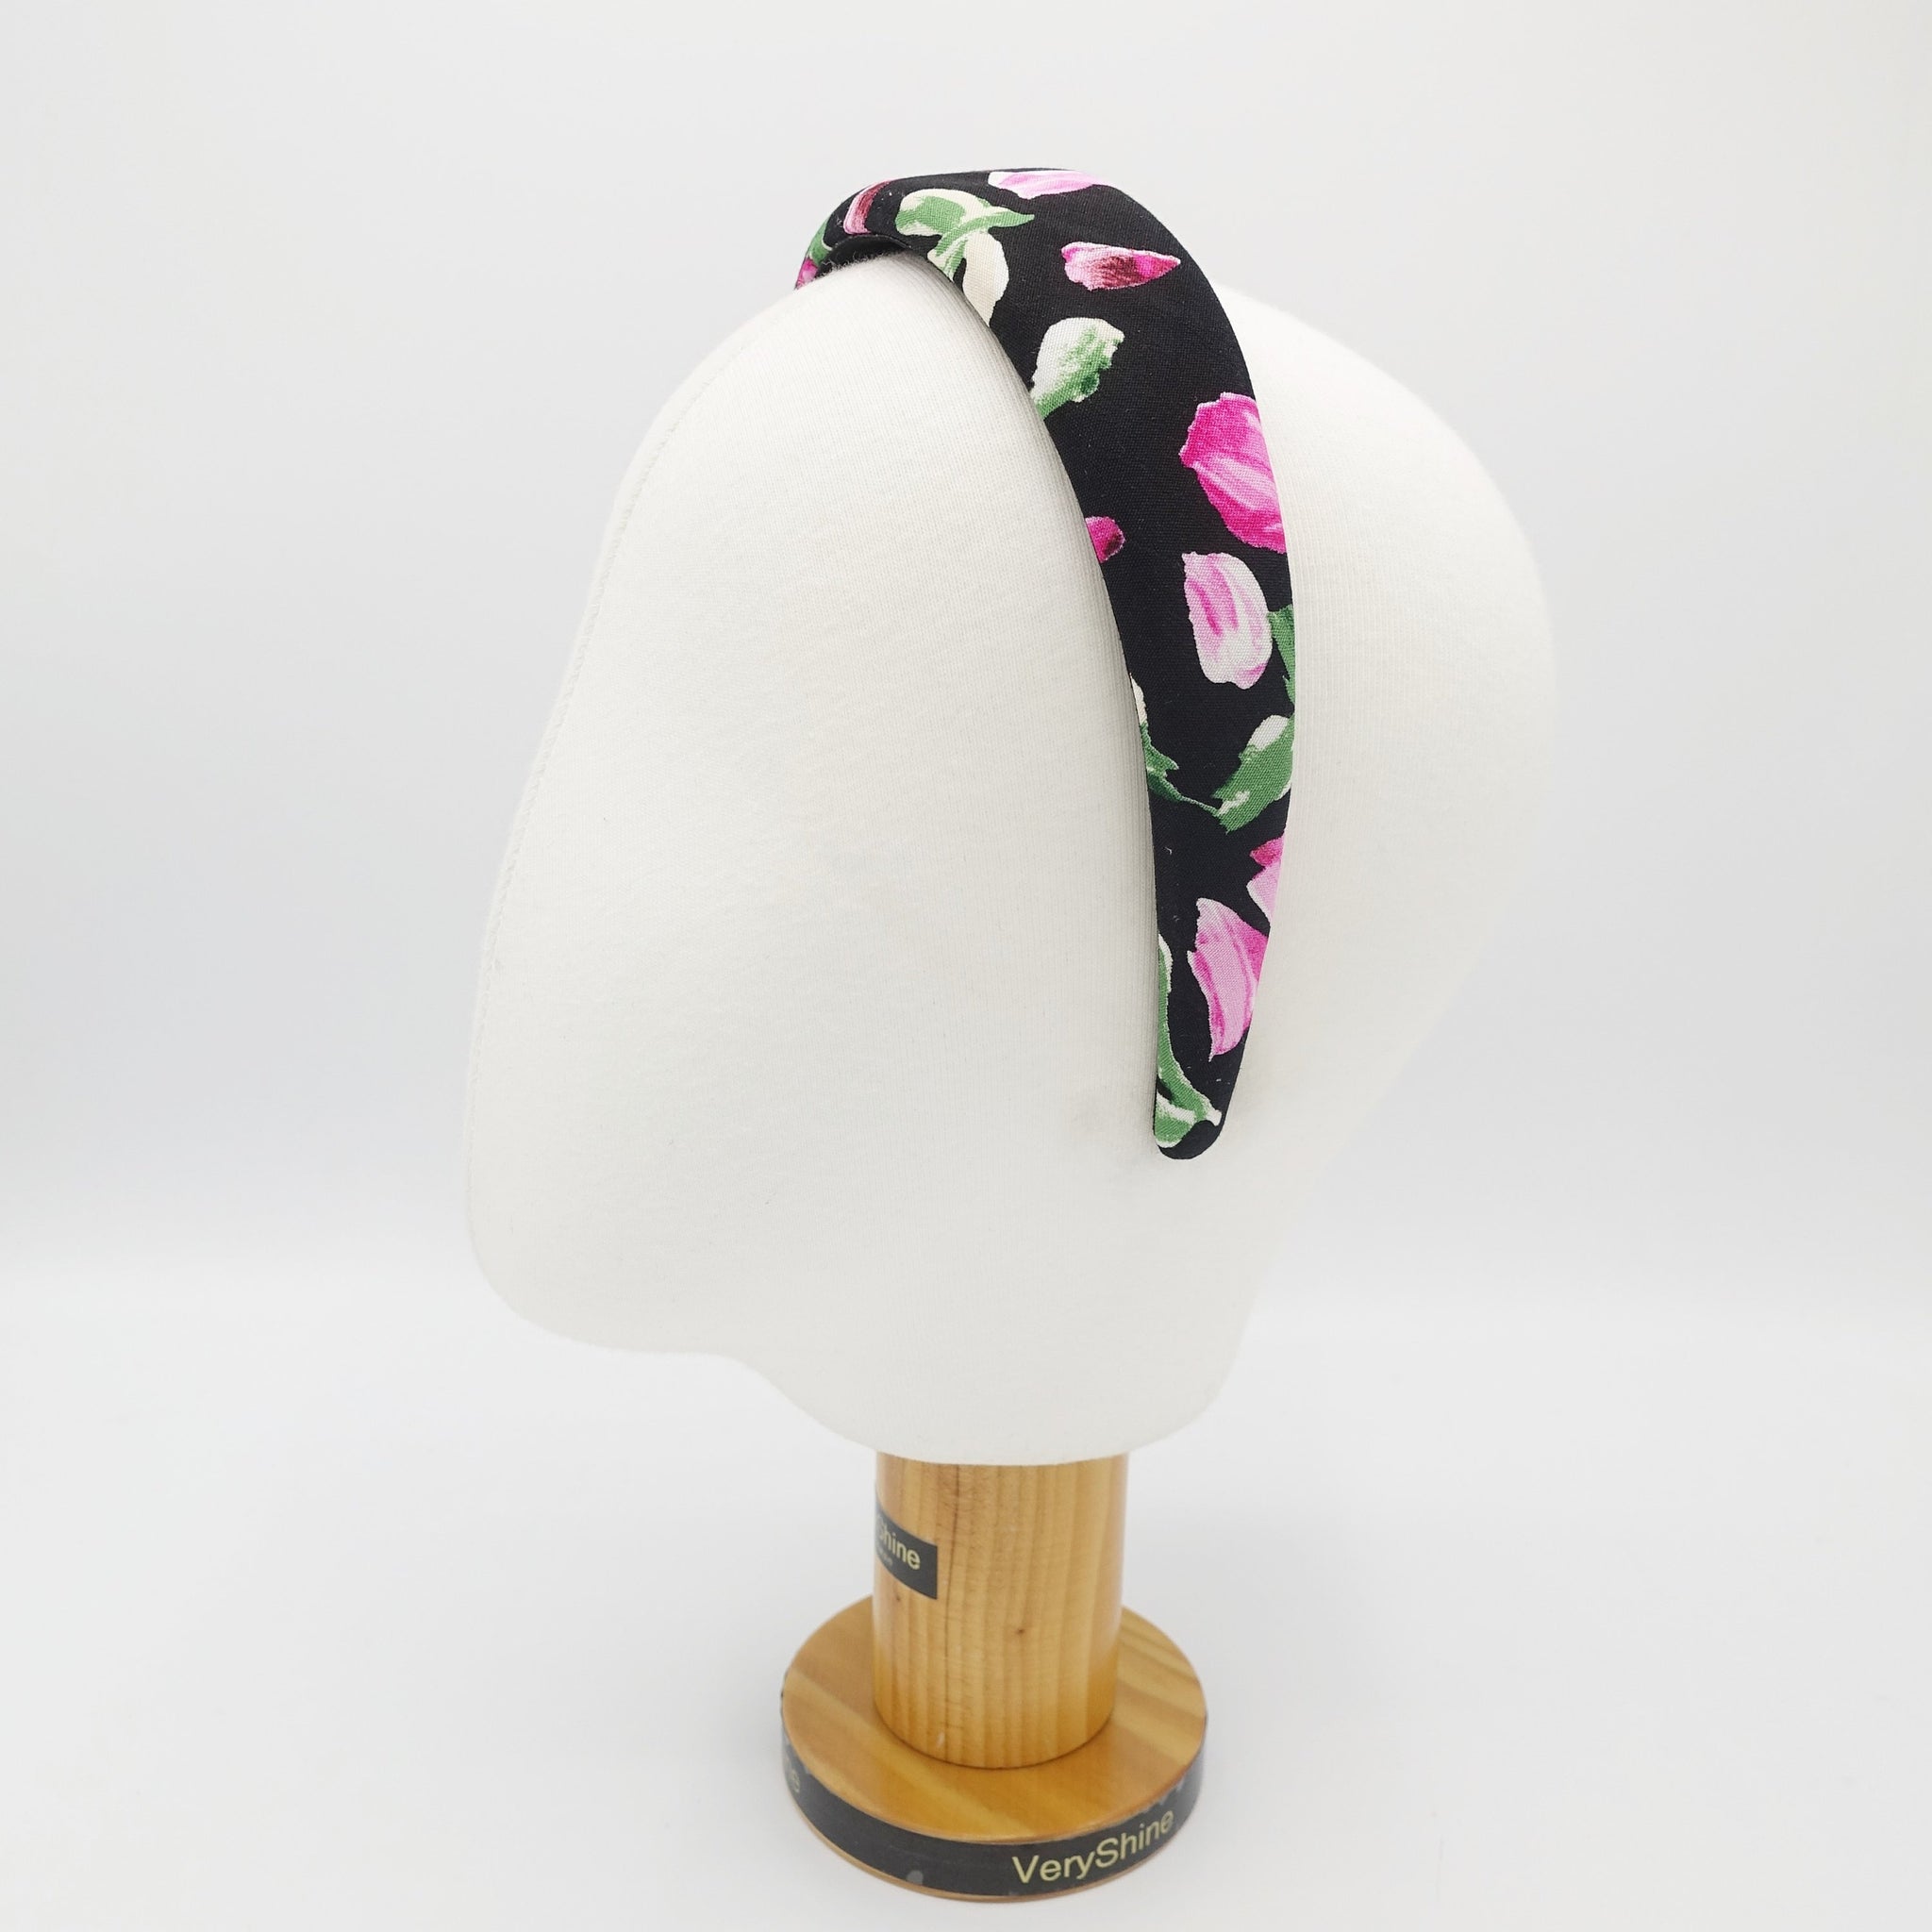 VeryShine Headband tulip print headband padded hairband for women